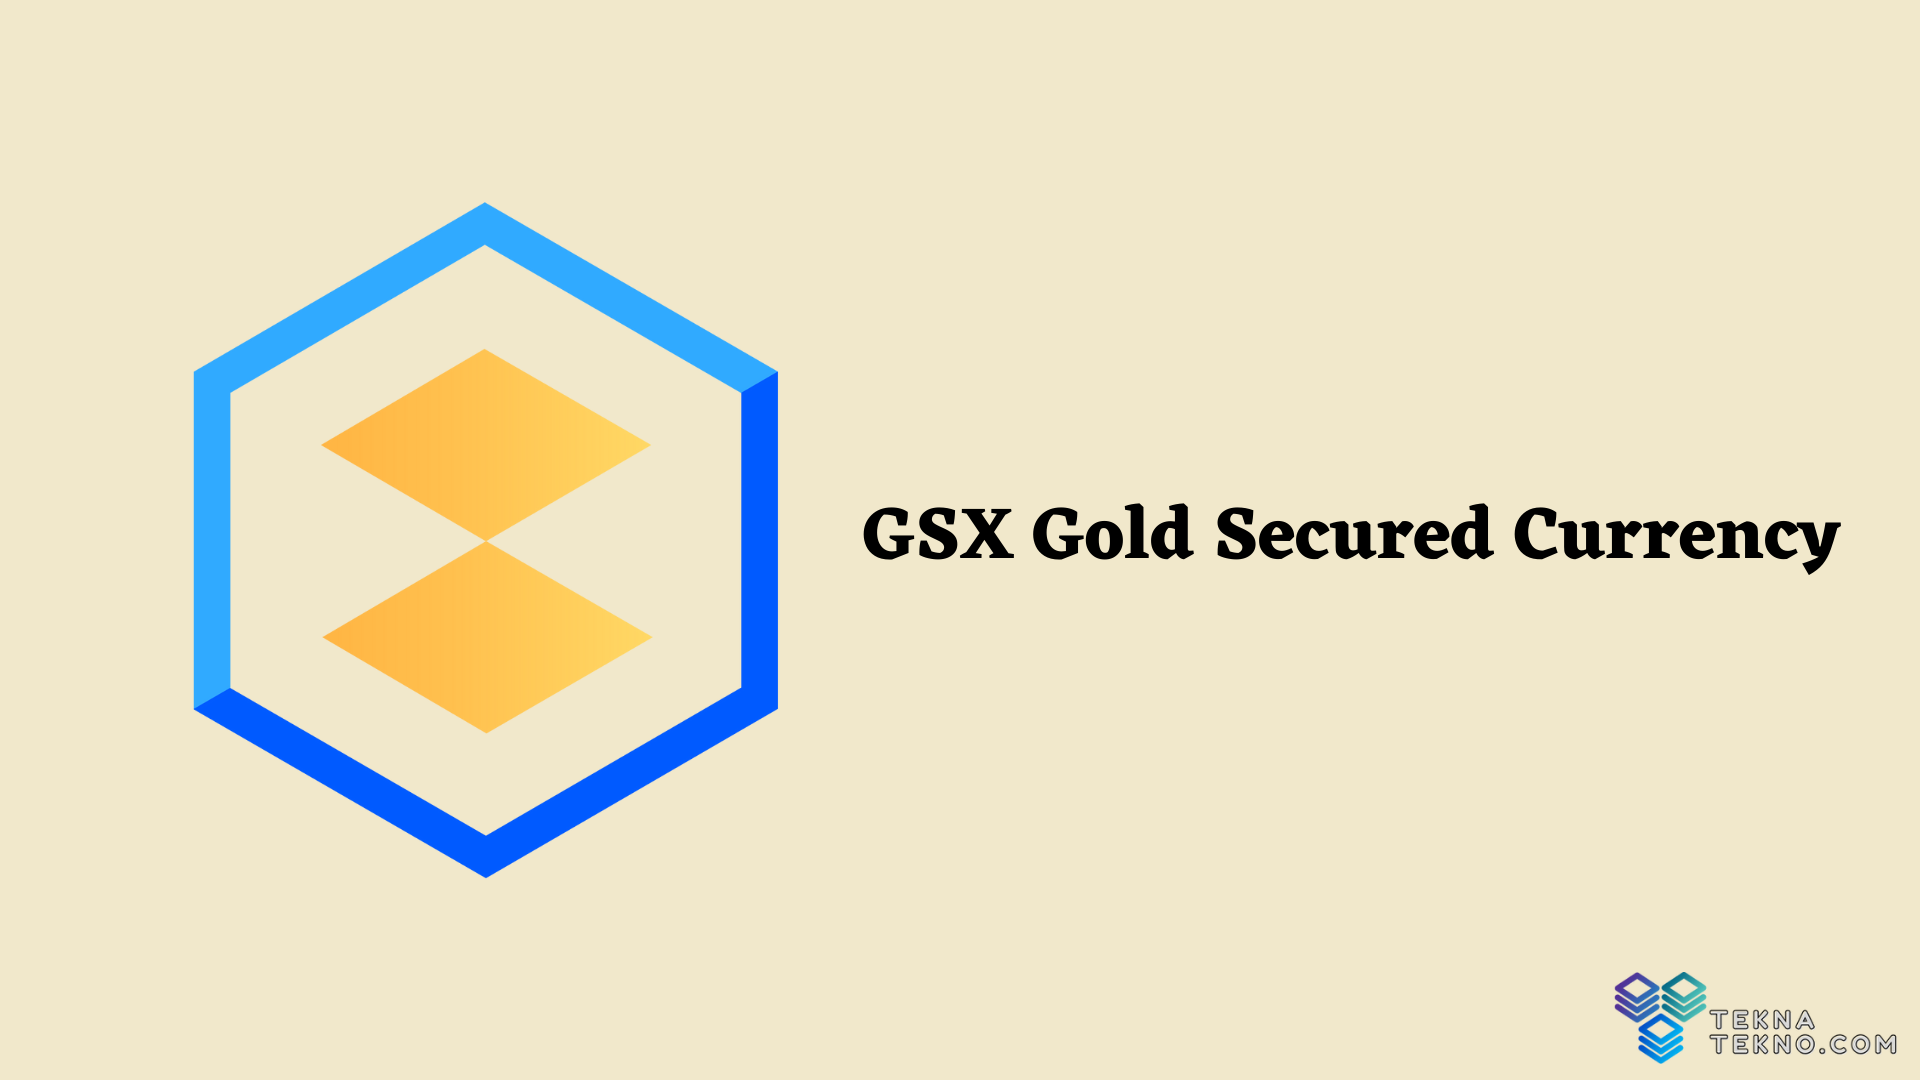 Aset Gold Secured Currency GSX Crypto Turun Hingga 1,45%